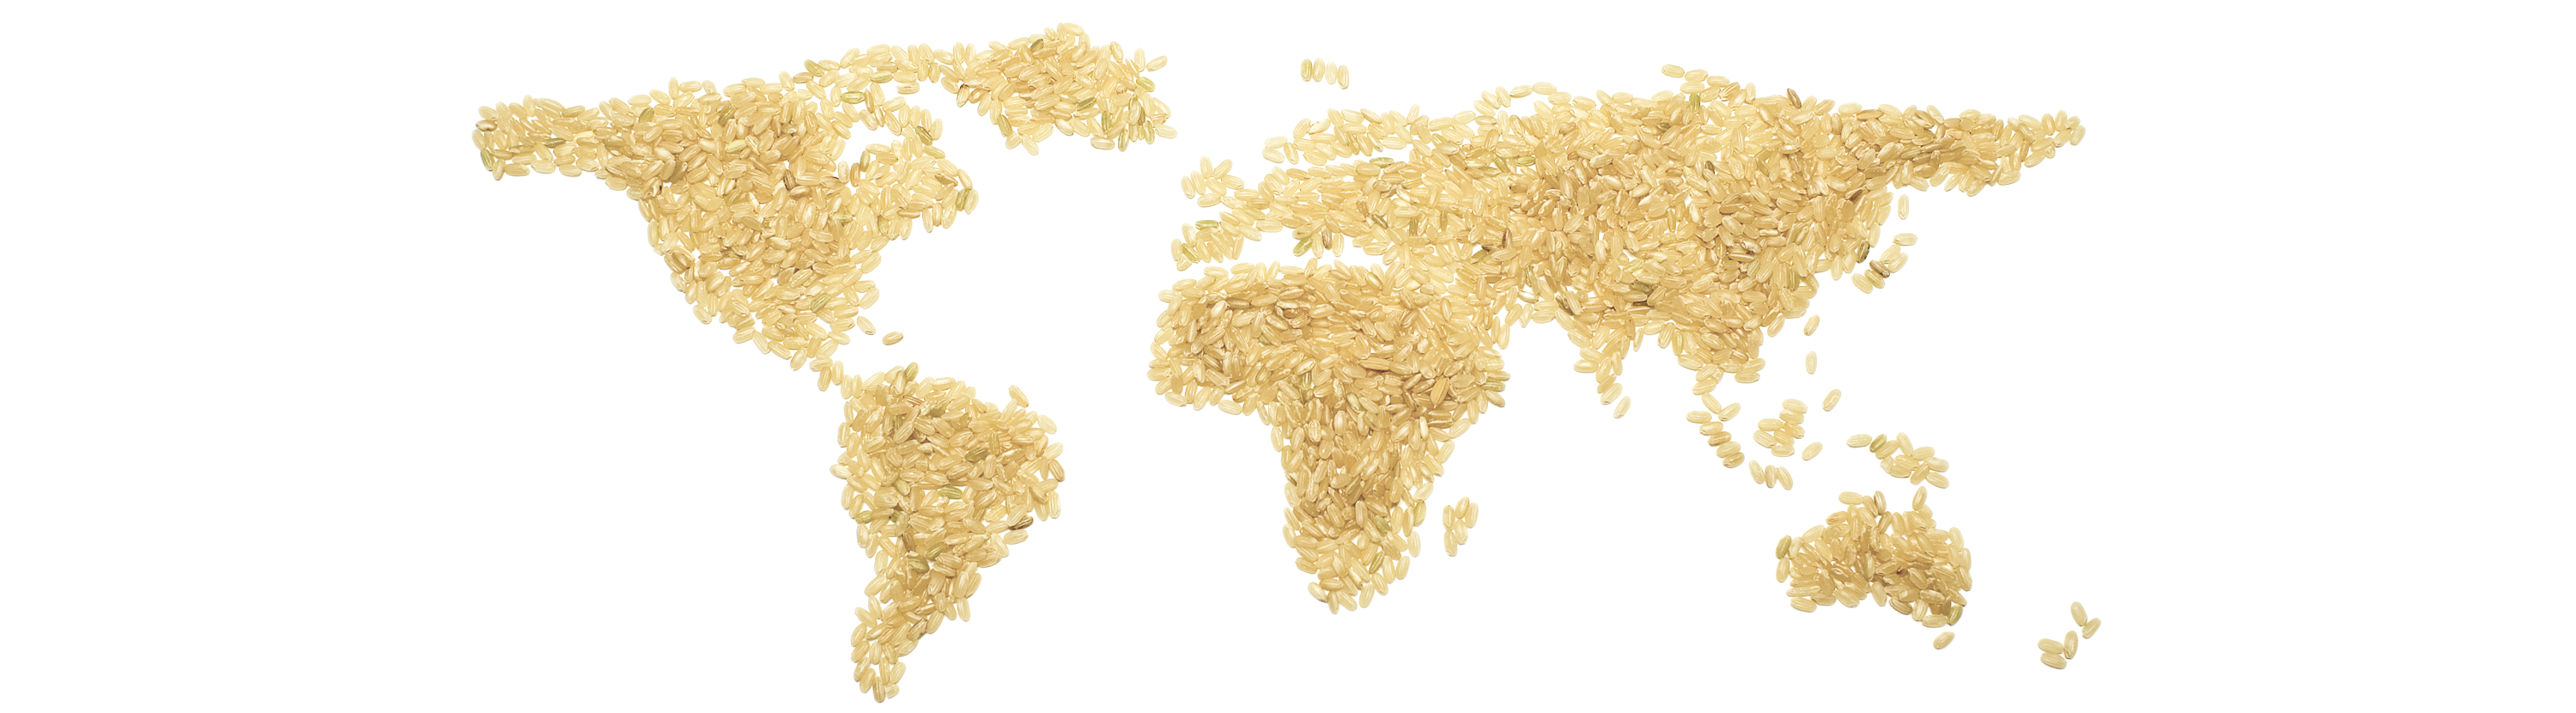 atlantic le chef mapa mundo feito por arroz